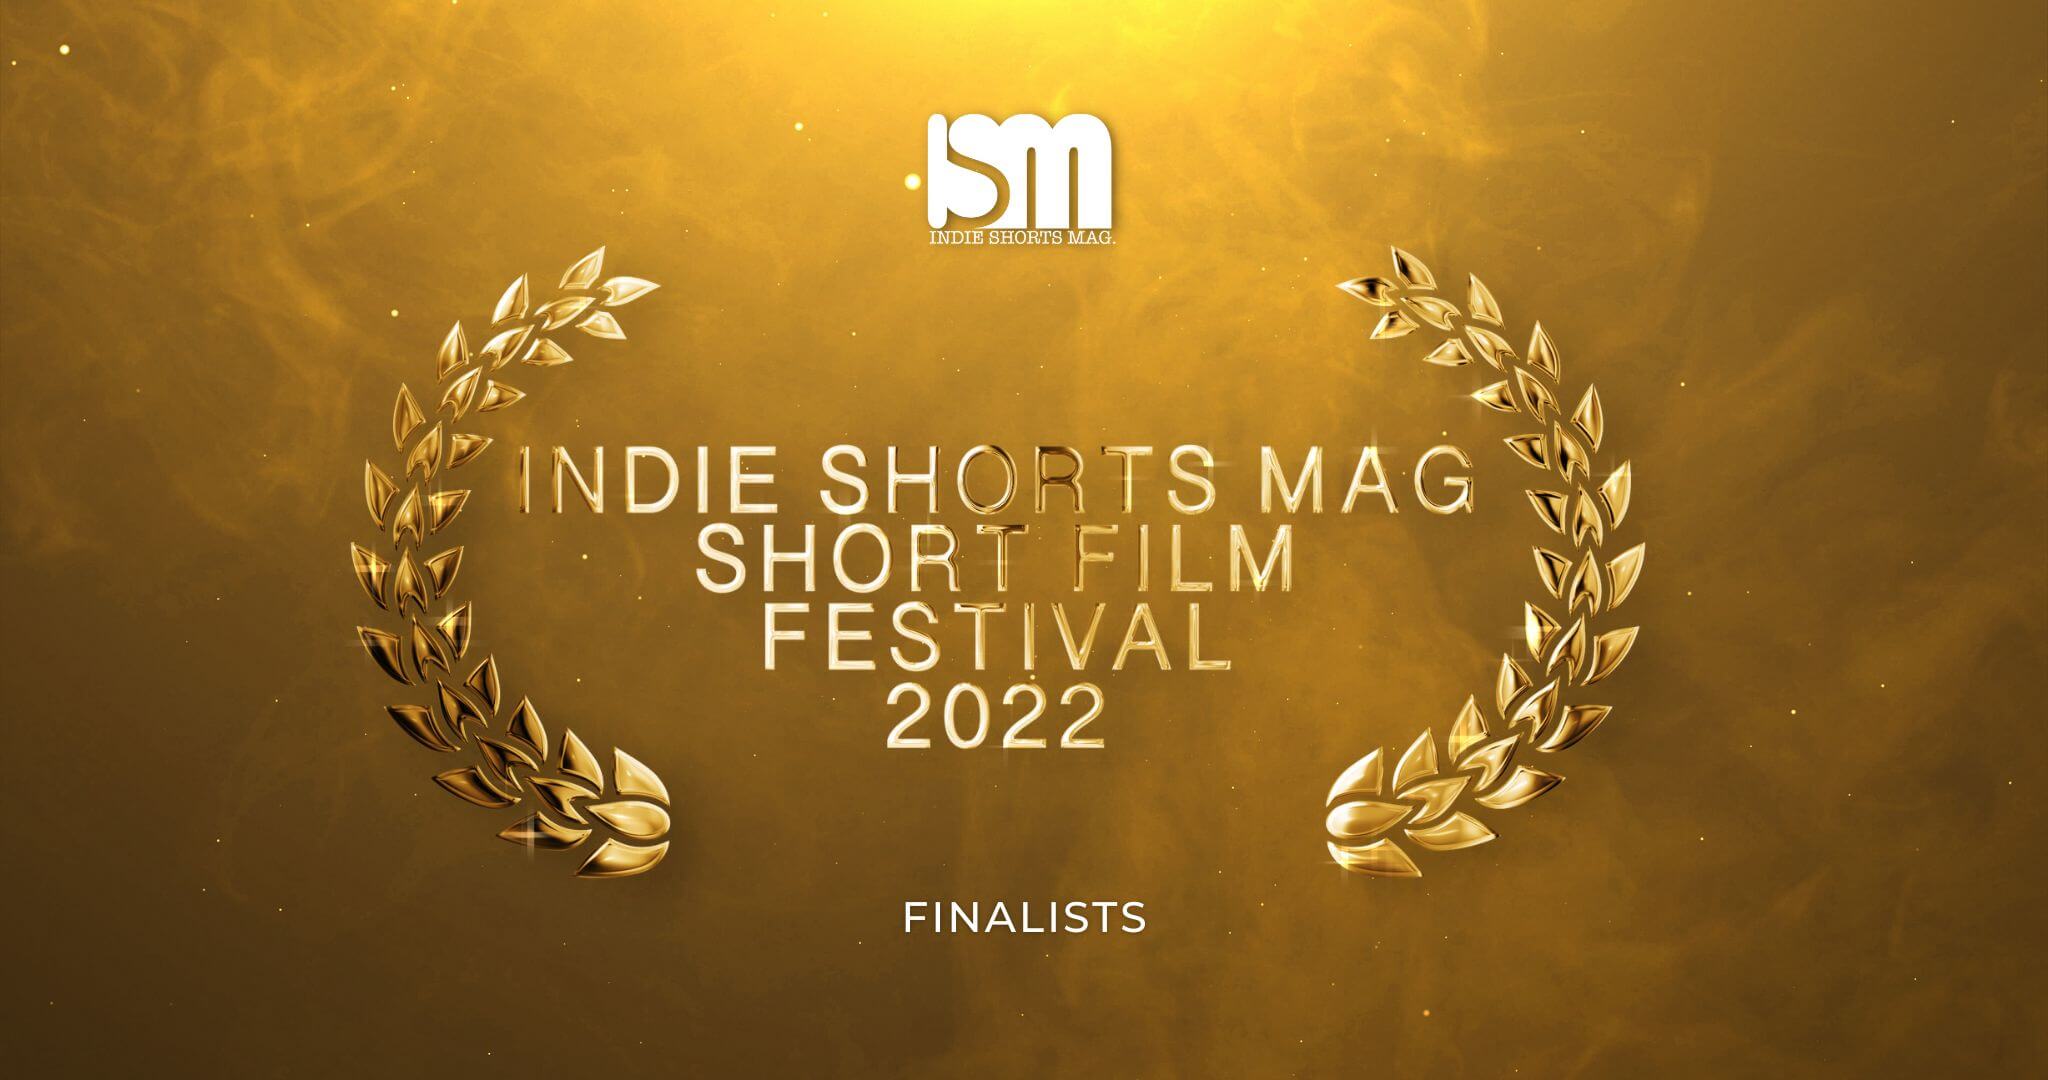 Indie Shorts Mag Short Film Festival 2022 - Finalist Post